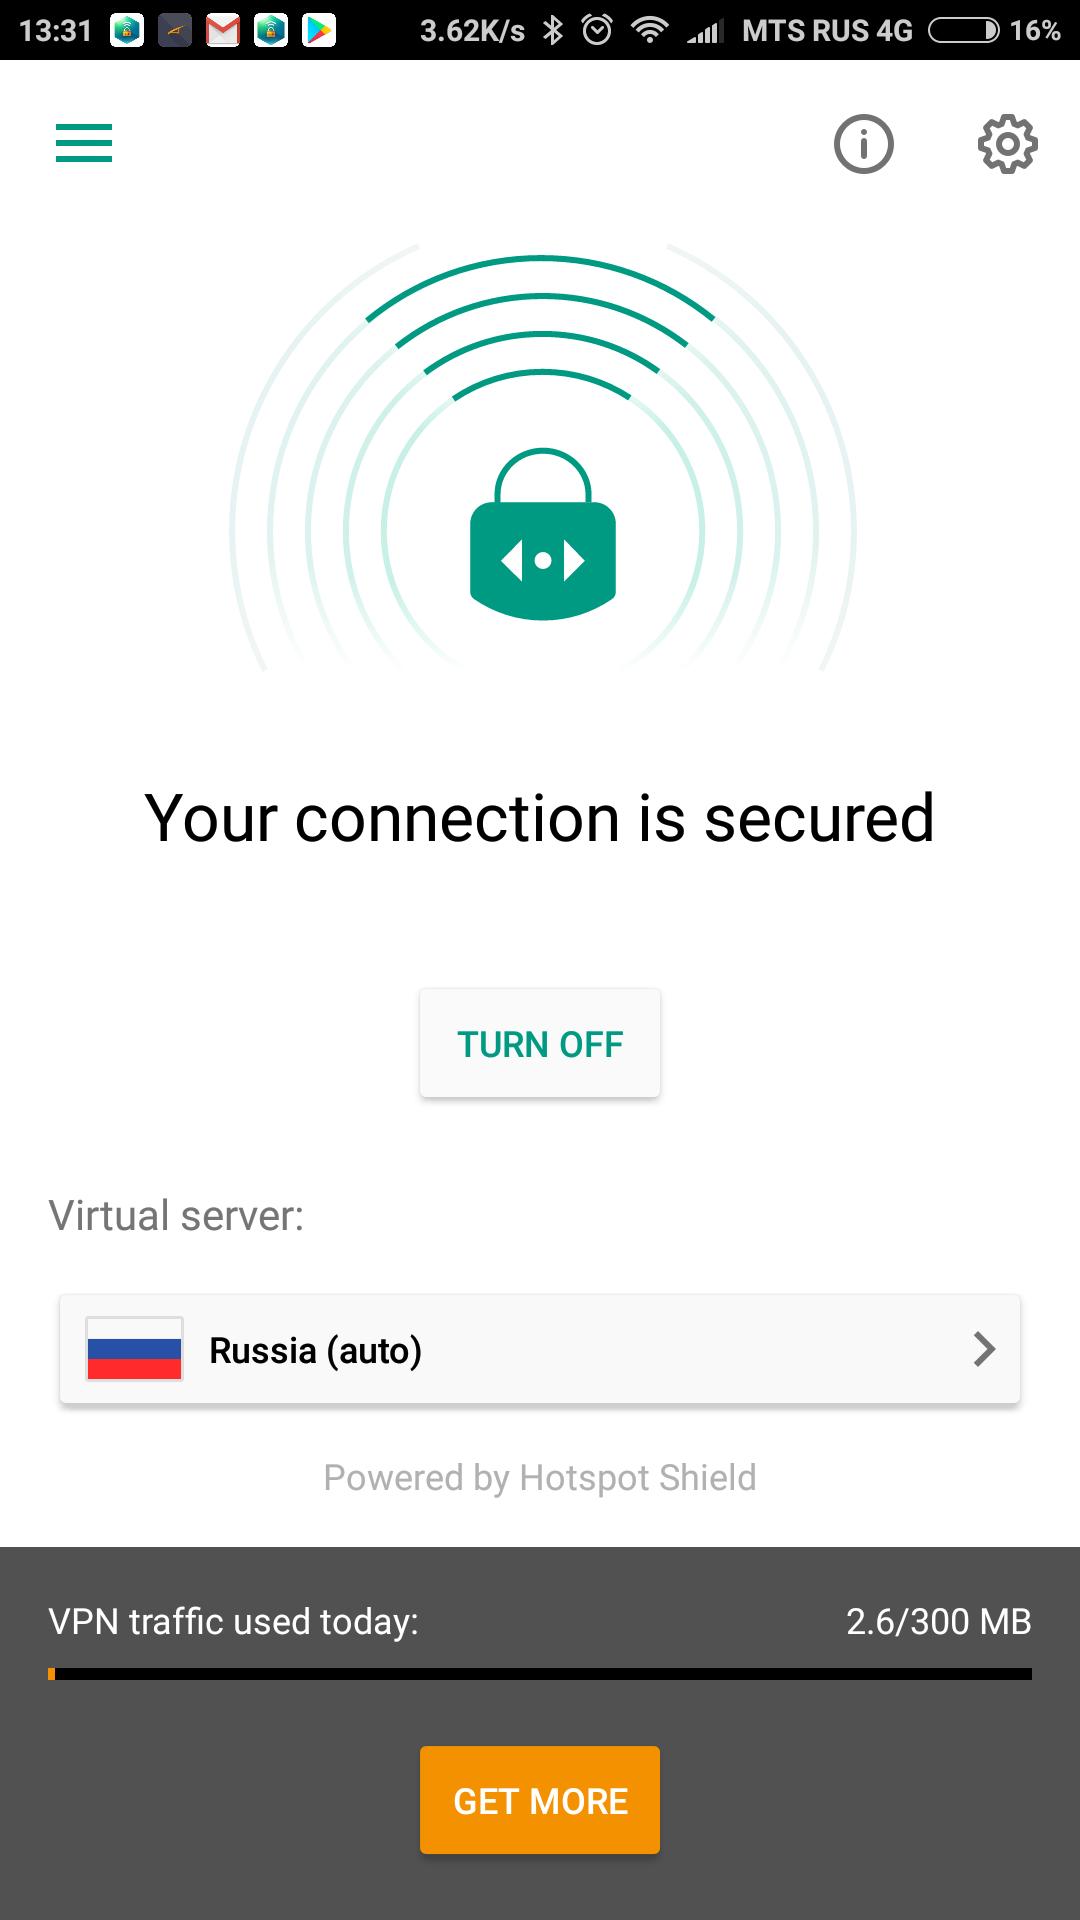 Касперский на нашей стороне — запущен VPN сервис Secure Connection